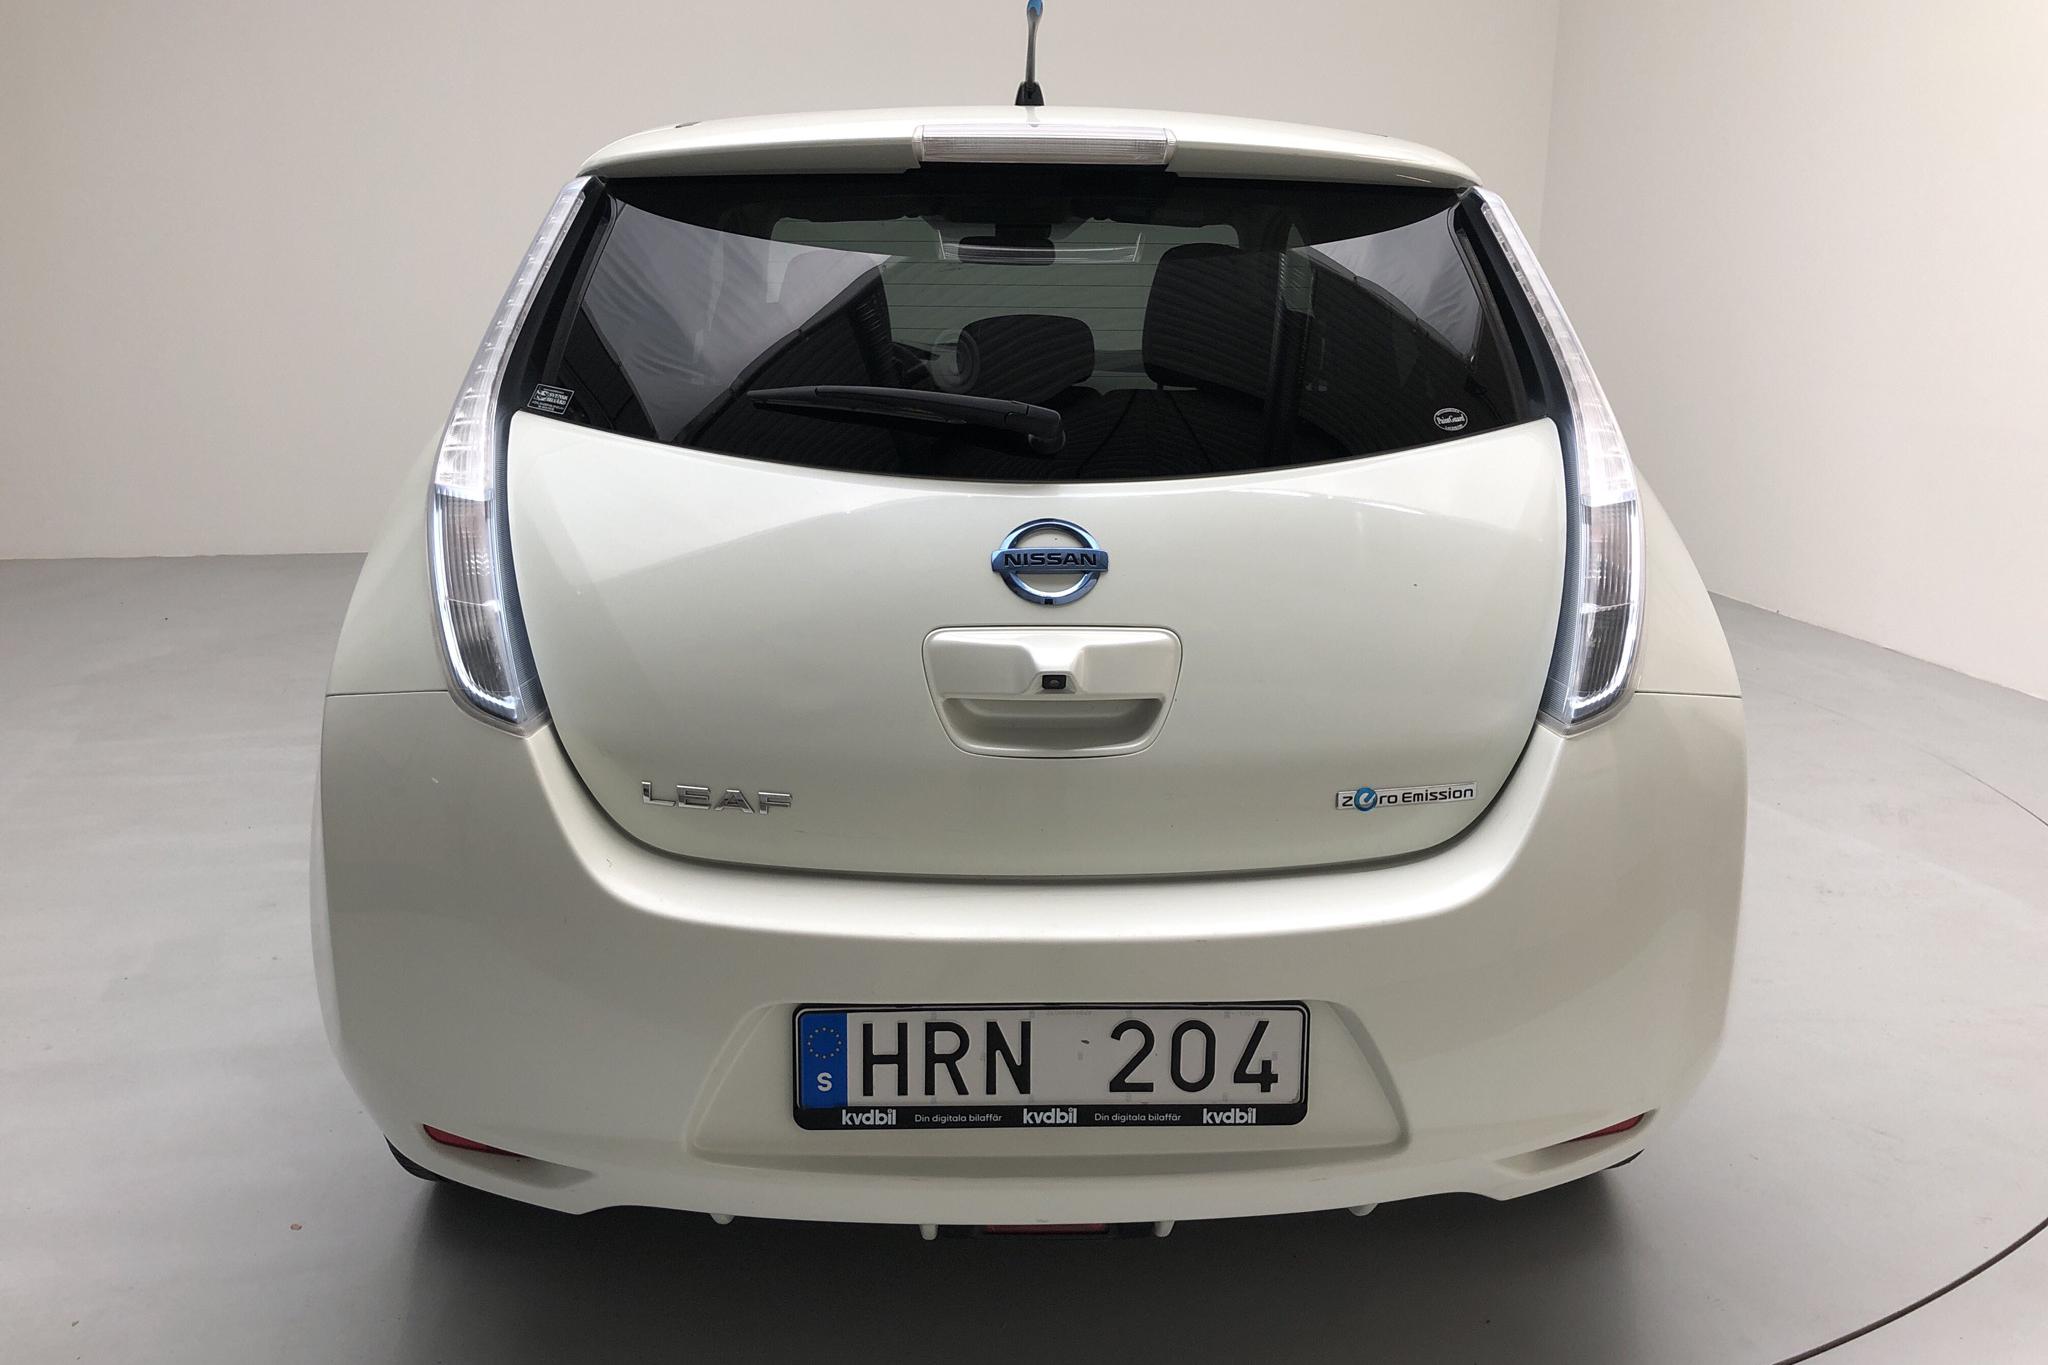 Nissan LEAF 5dr (109hk) - 103 170 km - Automatic - white - 2013